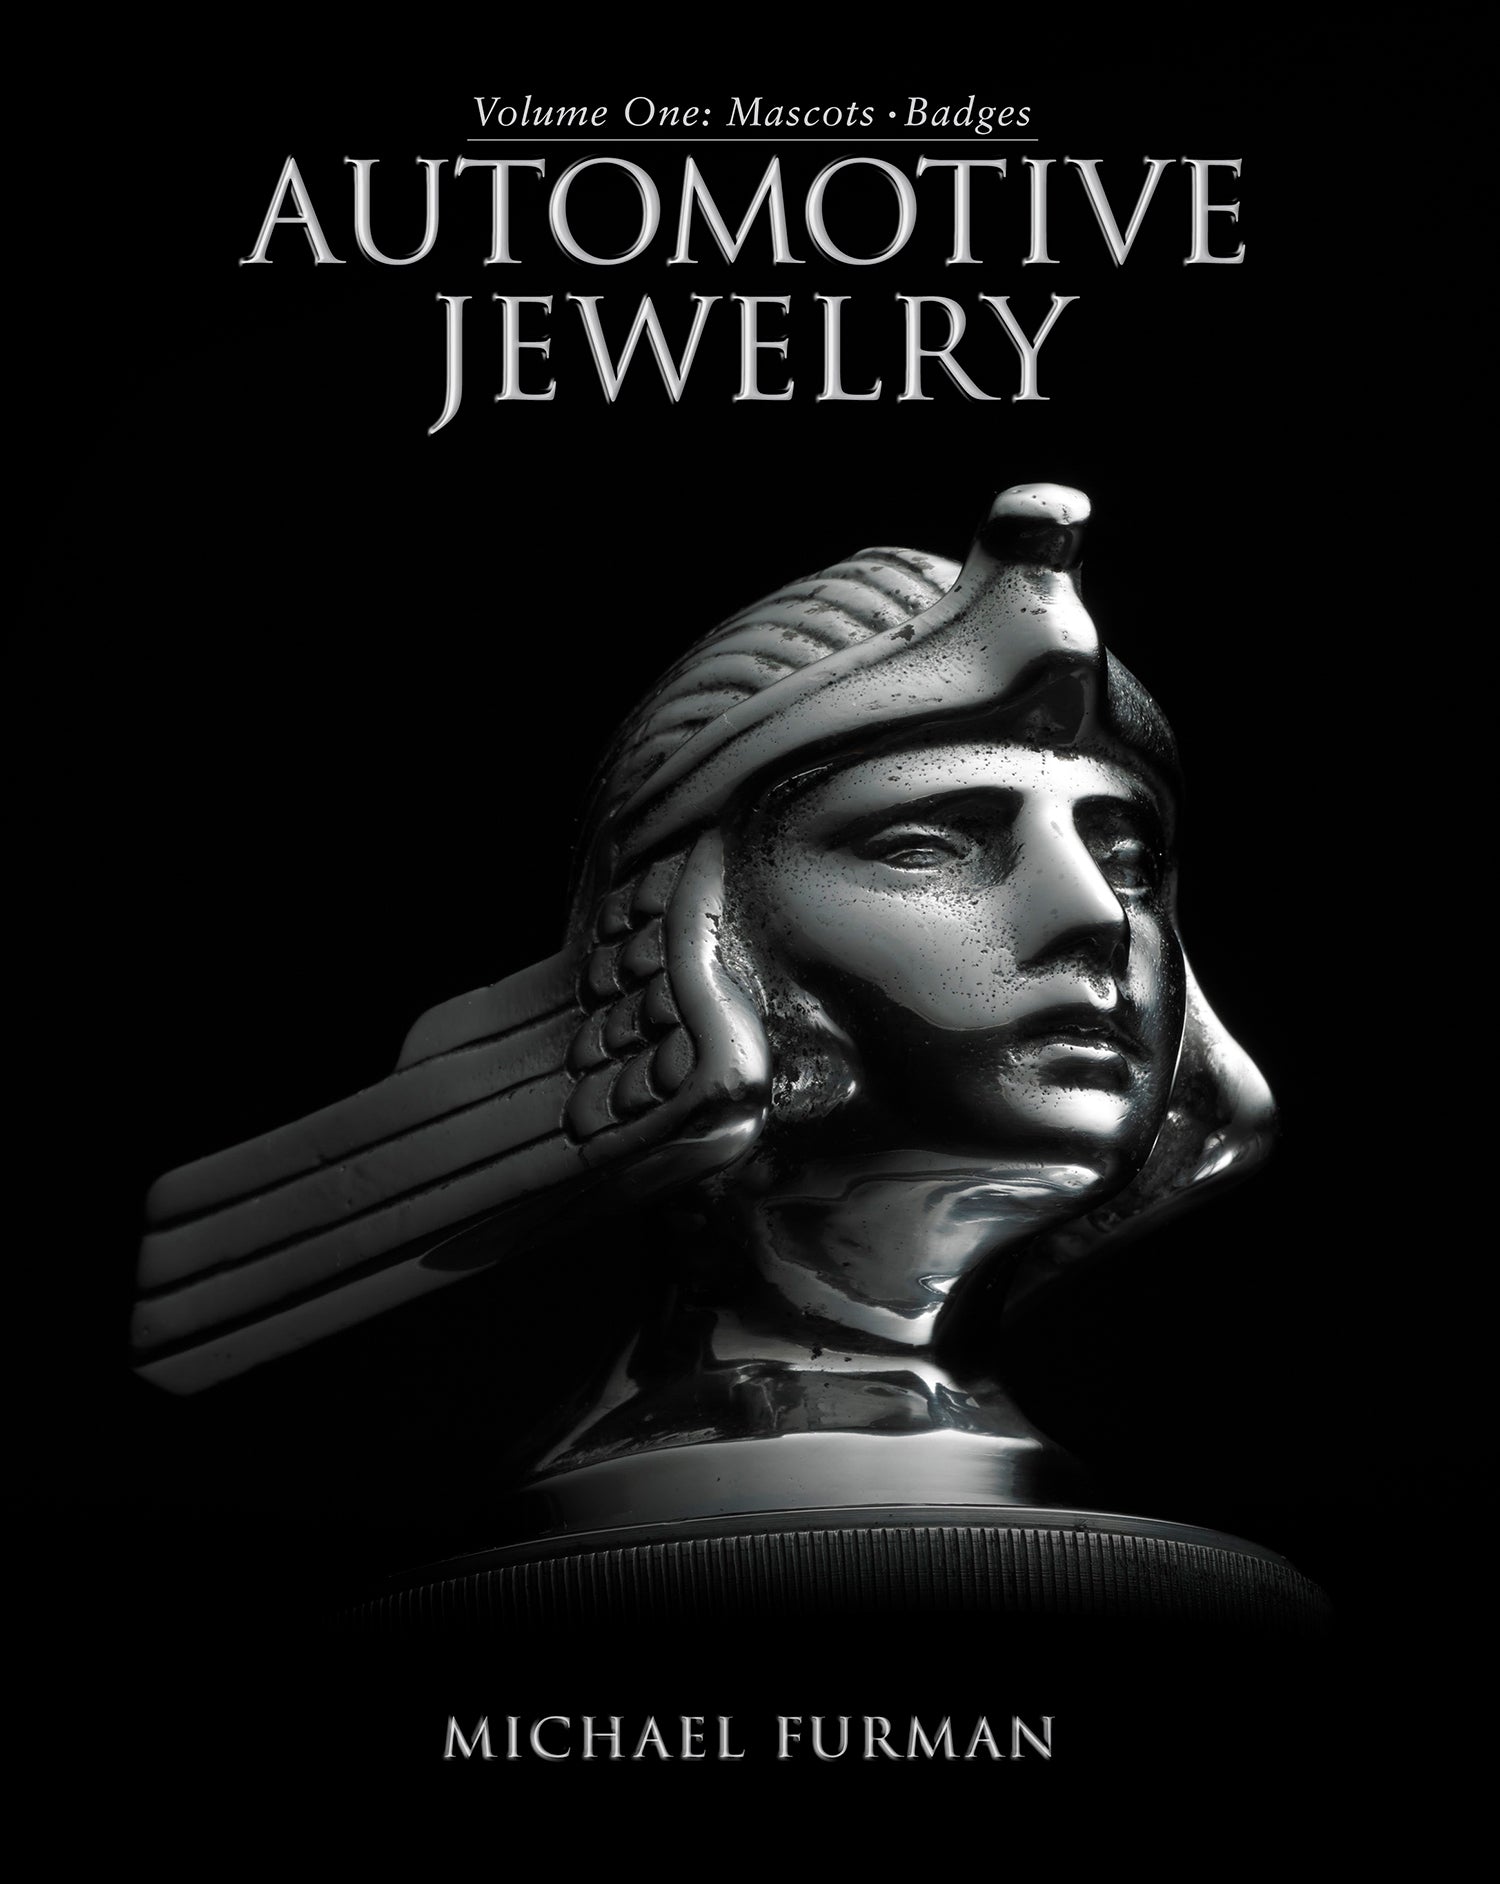 Automotive Jewelry, Volume One by Michael Furman